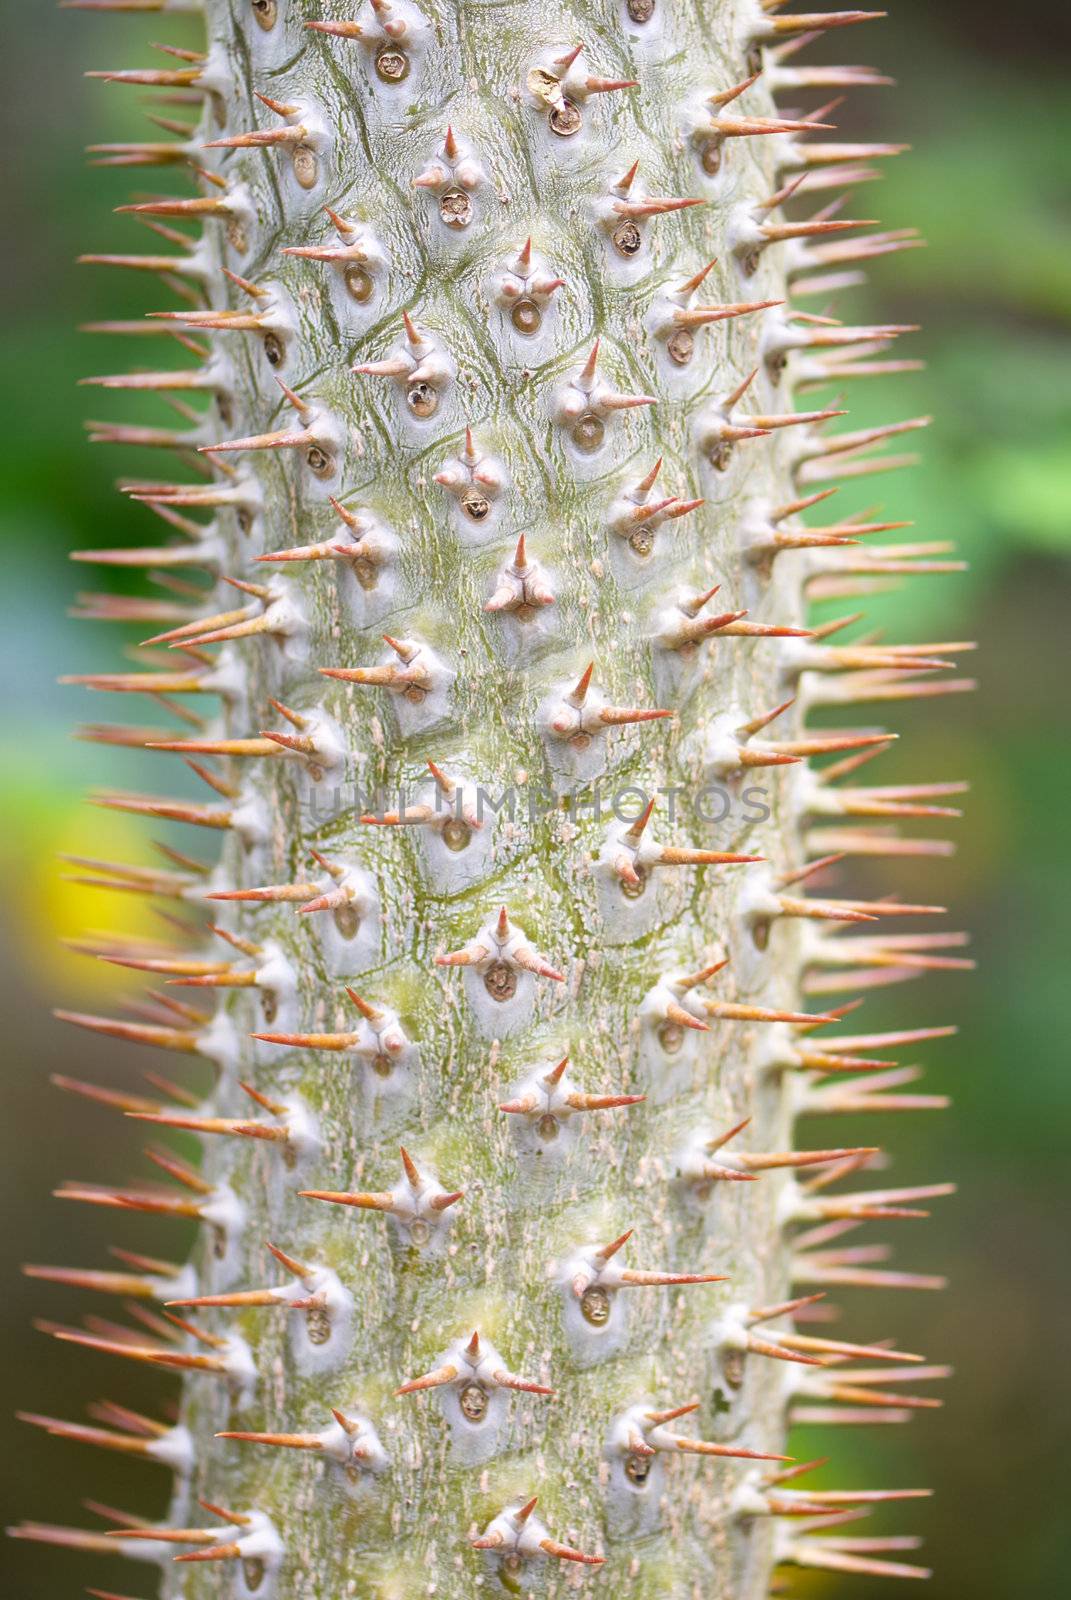 Madagaskar cactus by Olinkau